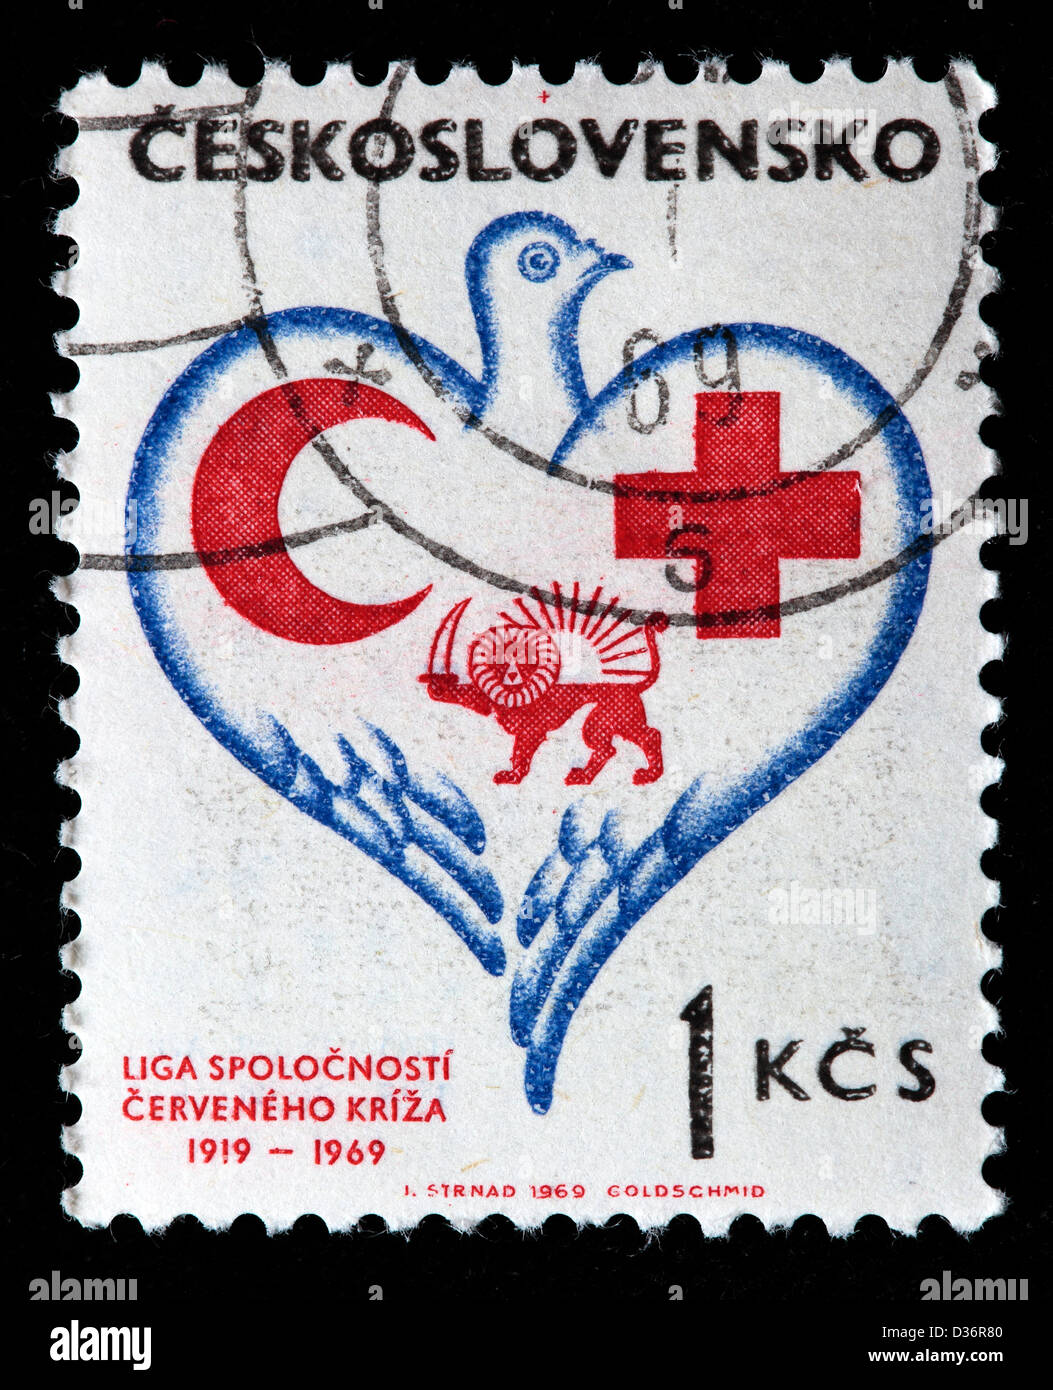 Crescent, Cross and Lion Emblem, postage stamp, Czechoslovakia, 1969 Stock Photo